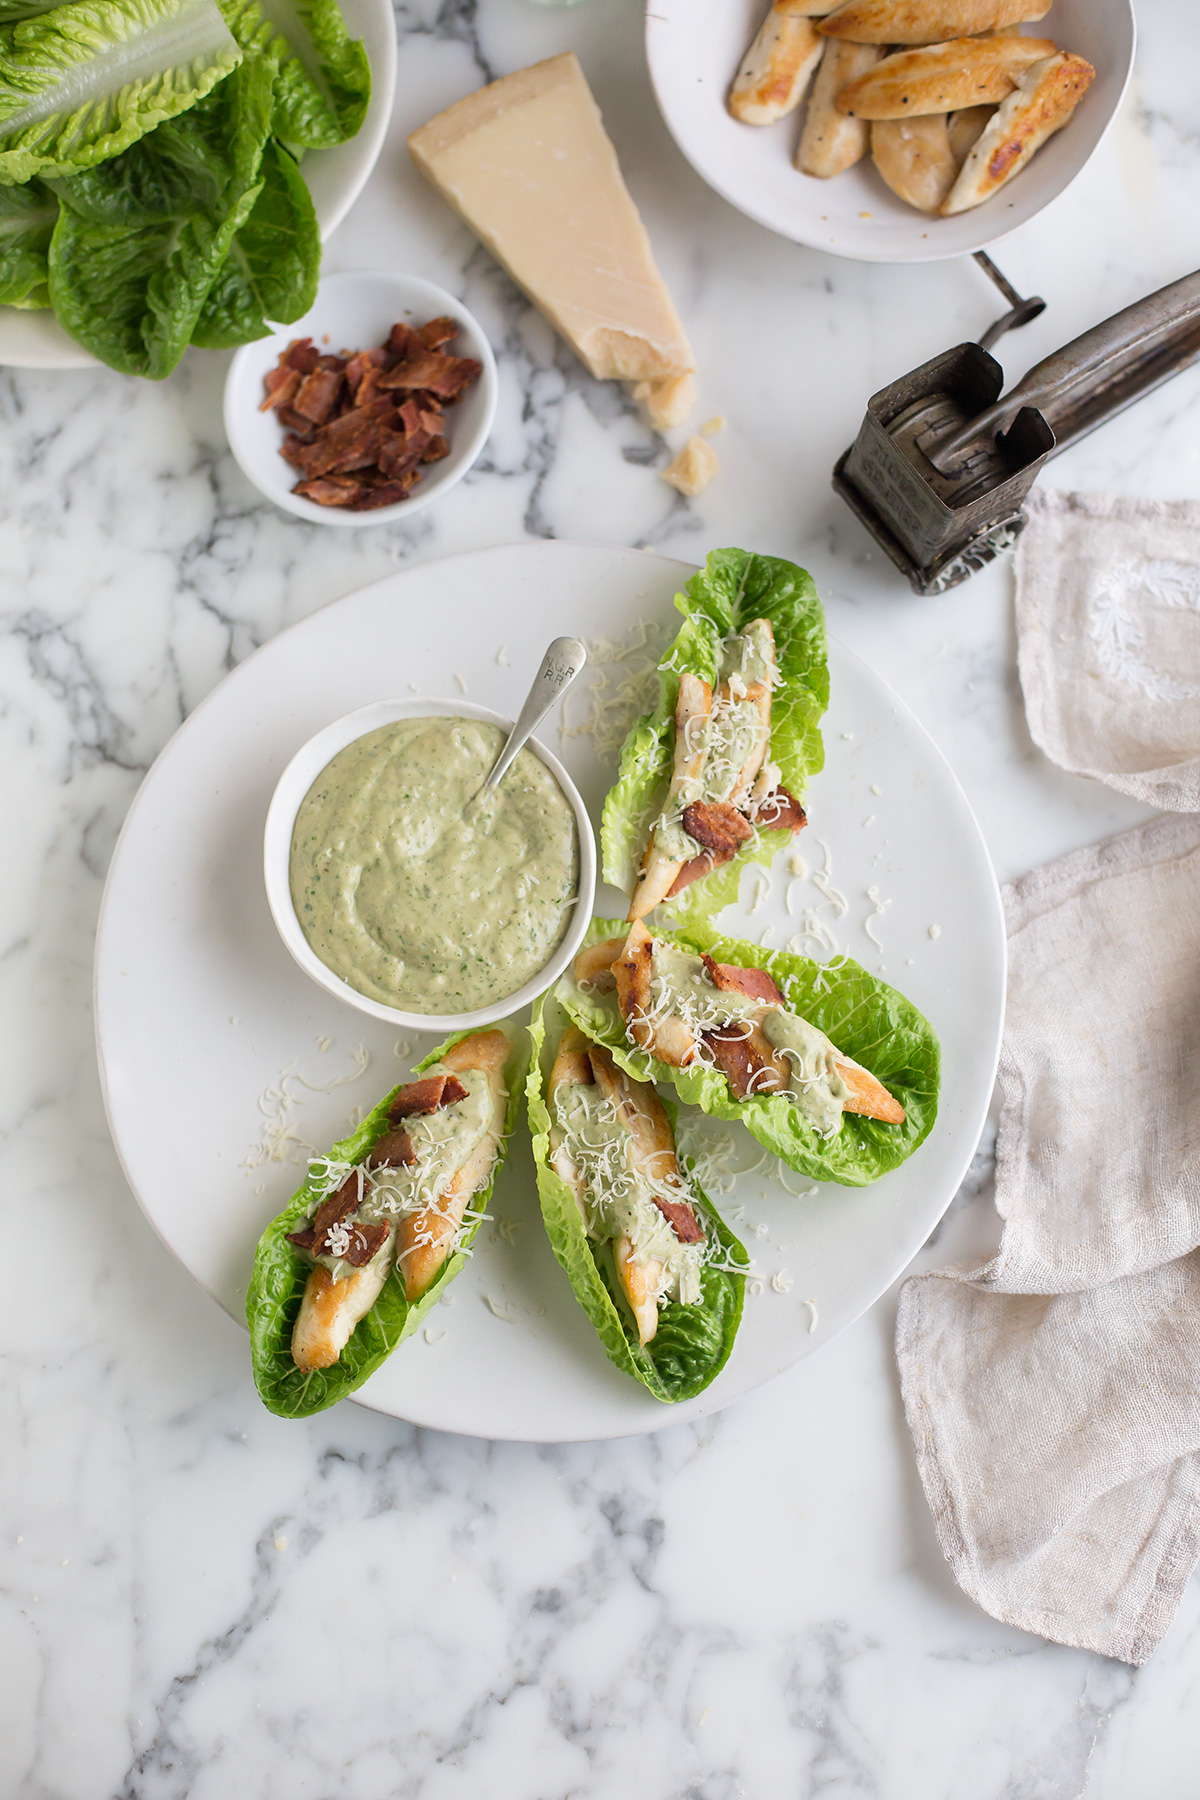 Lettuce & chicken wraps with green goddess Caesars dressing